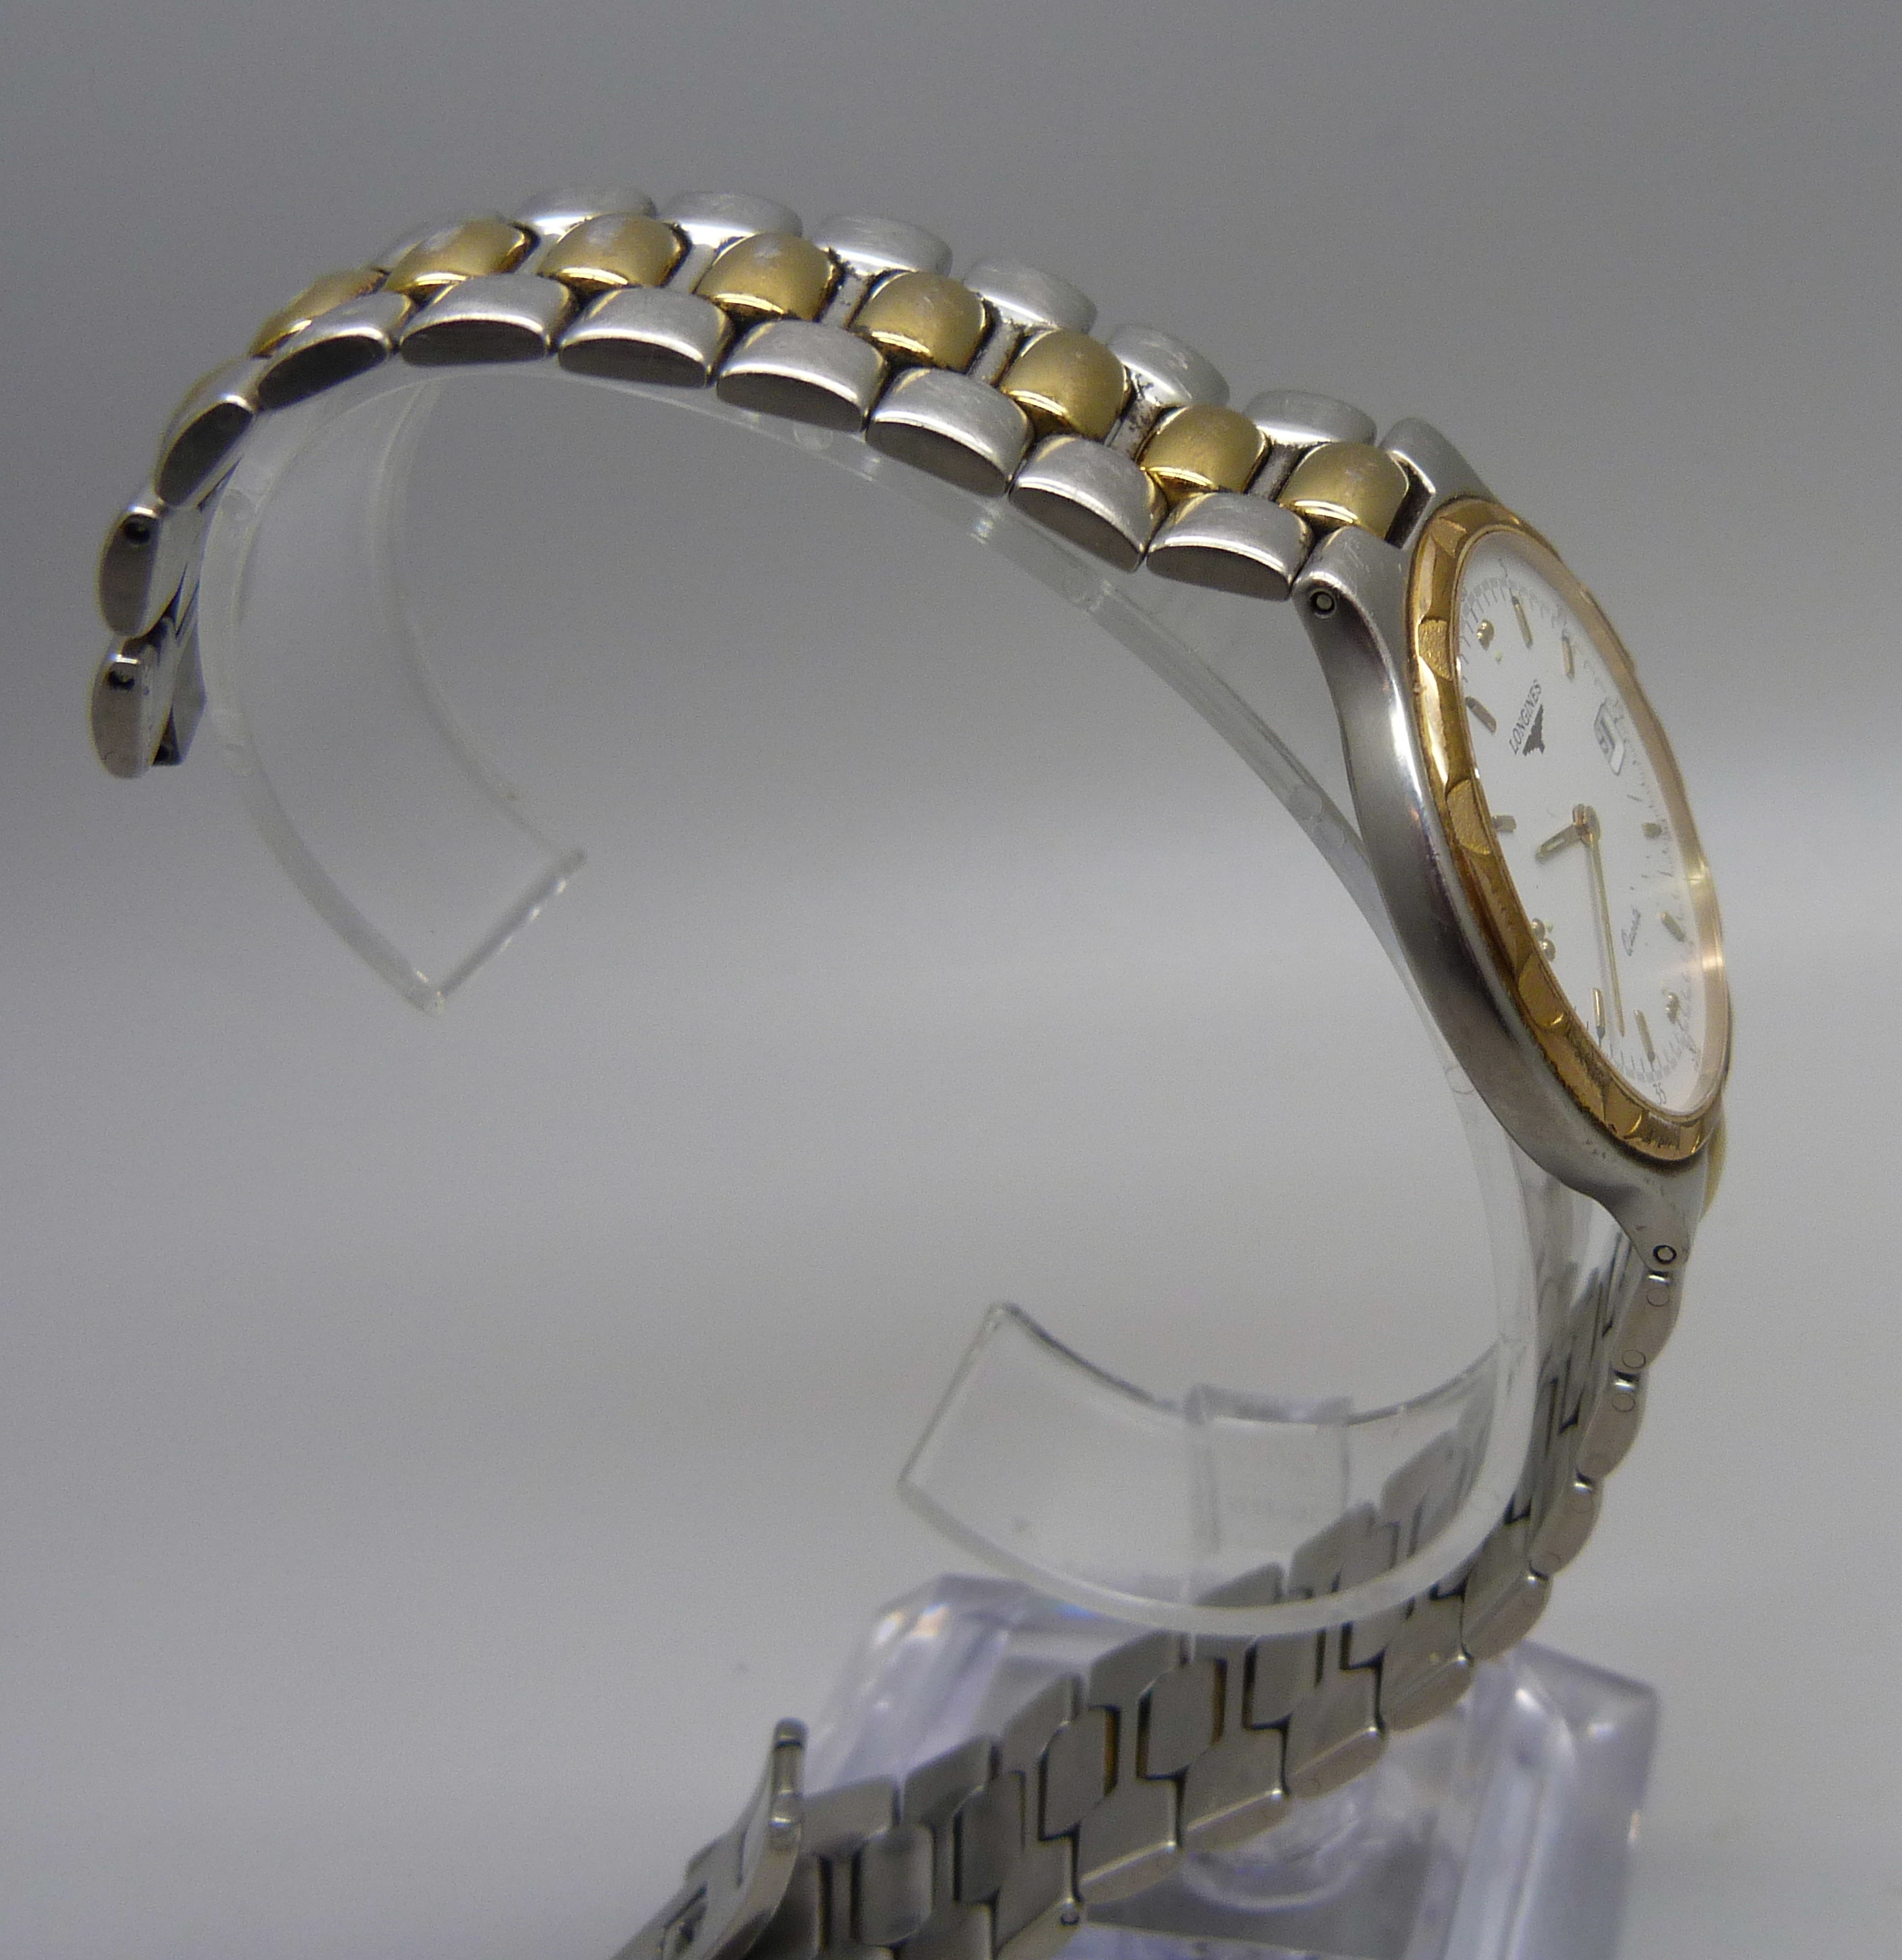 A Longines quartz wristwatch, requires clasp - Image 3 of 6